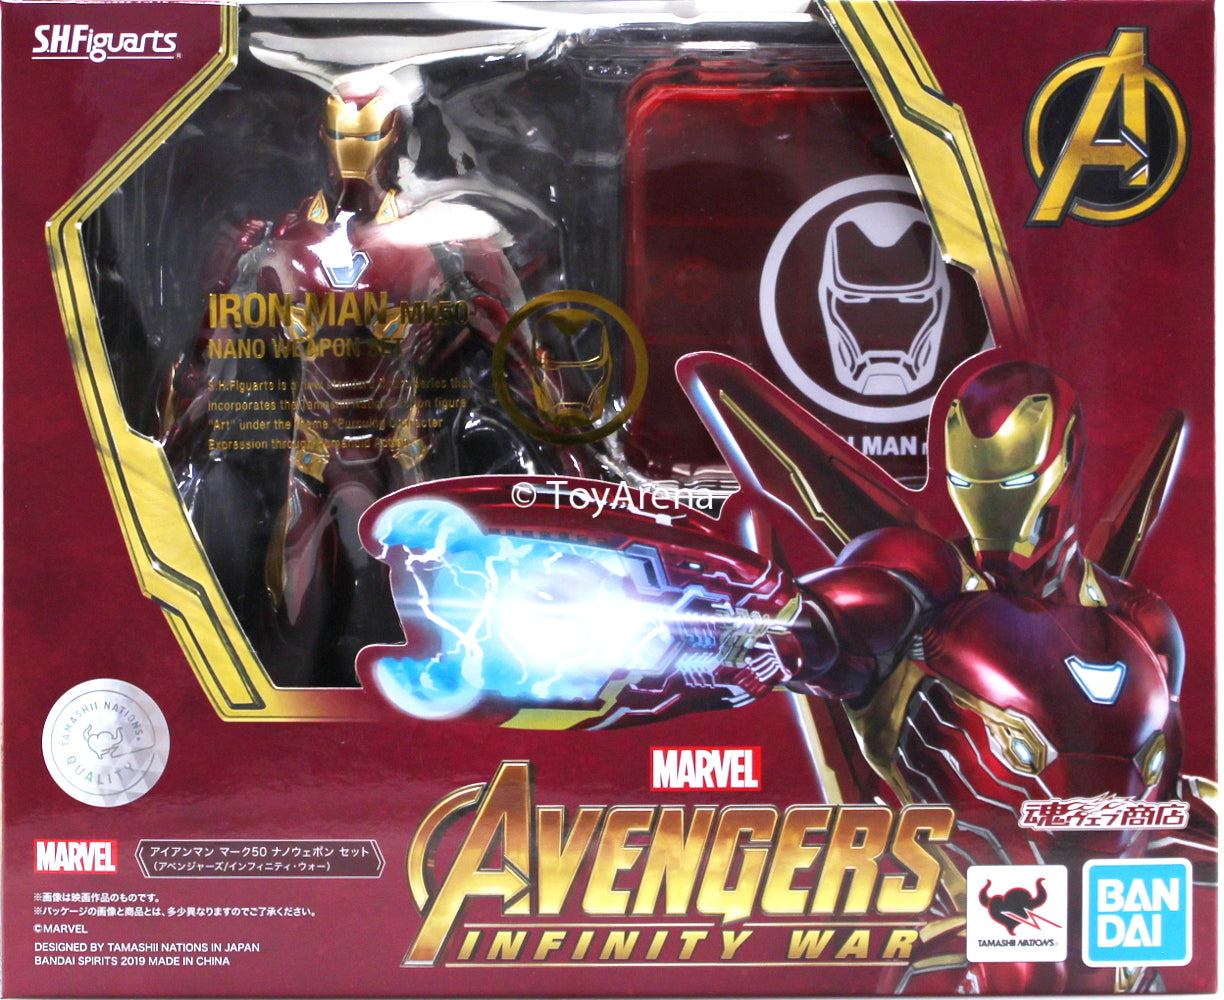 S.H. Figuarts Marvel Iron Man Mark L (50) Nano Weapon Set Avengers Infinity War Action Figure